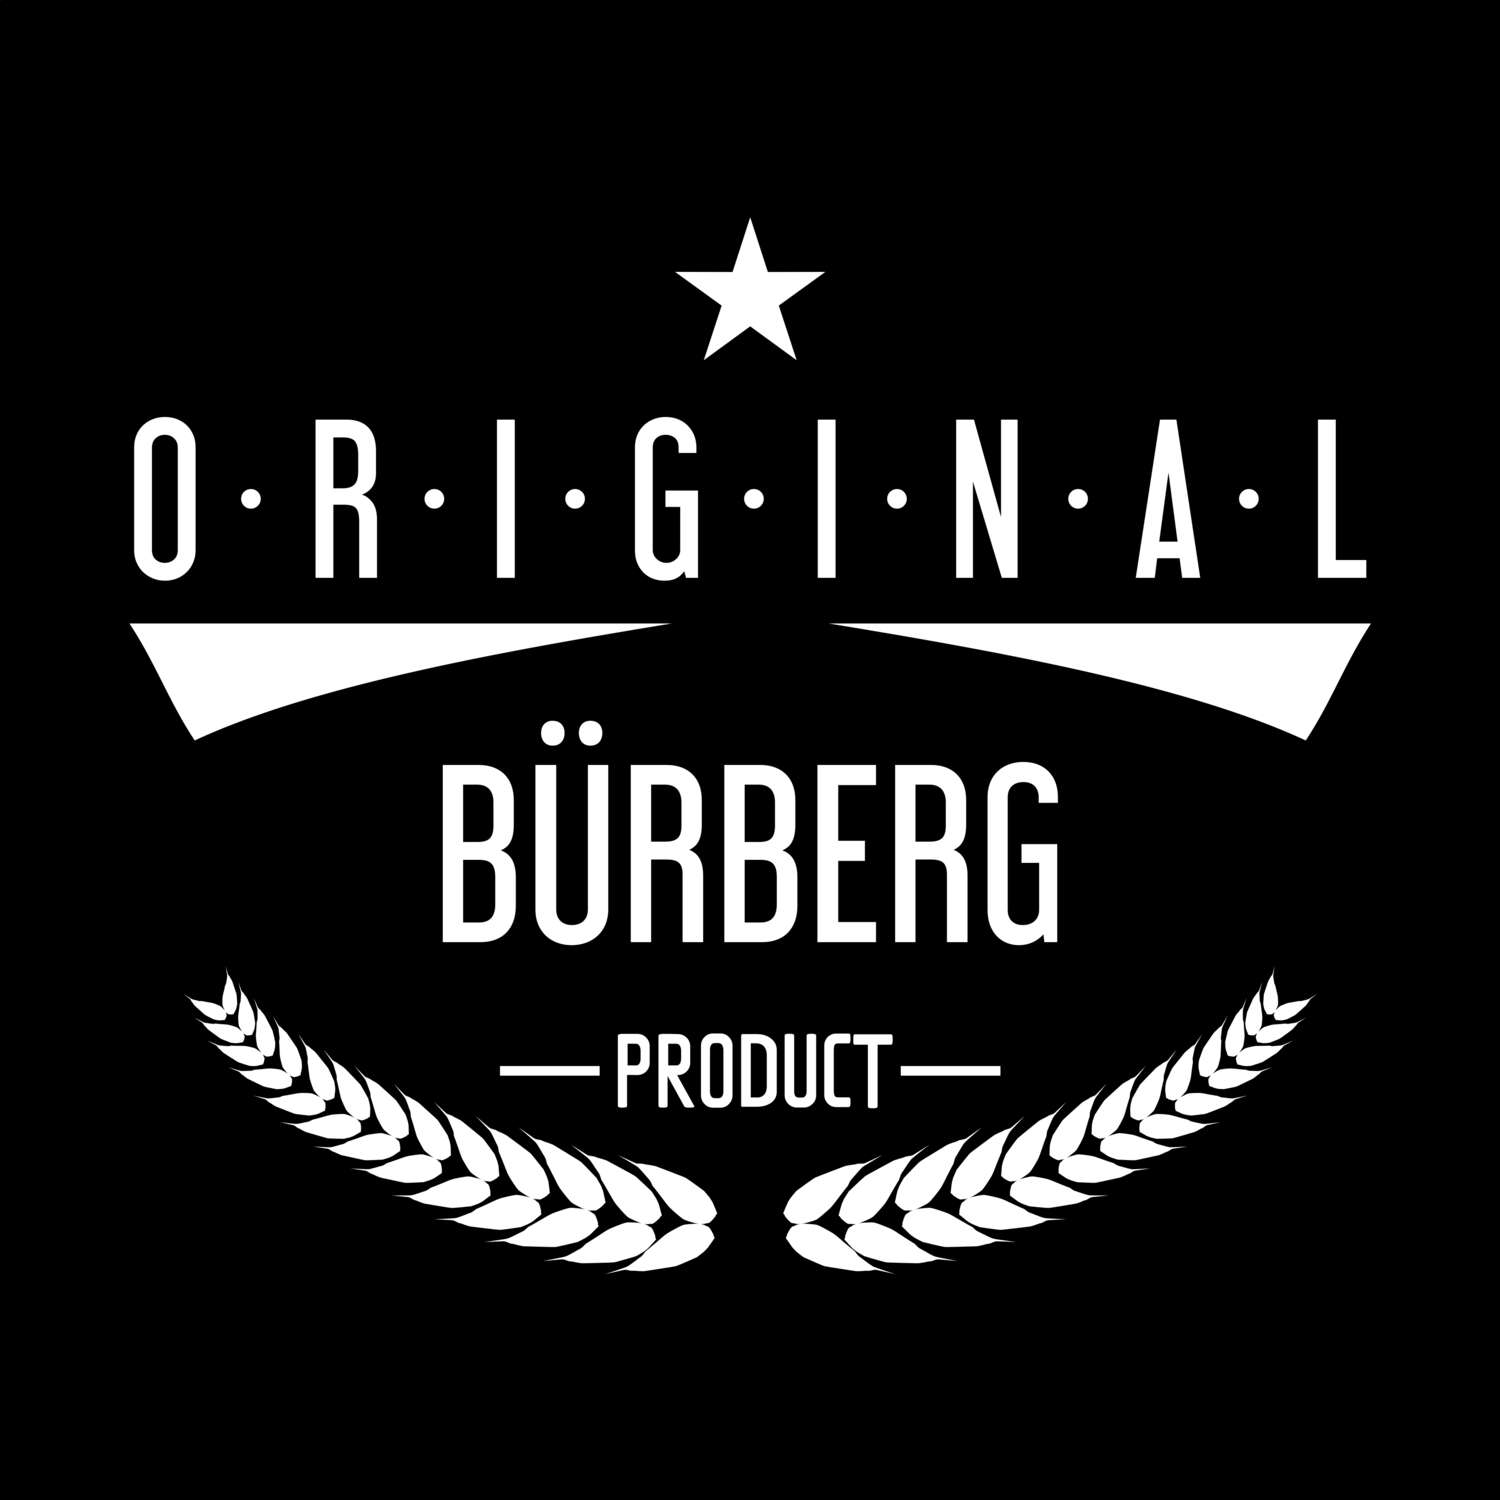 Bürberg T-Shirt »Original Product«